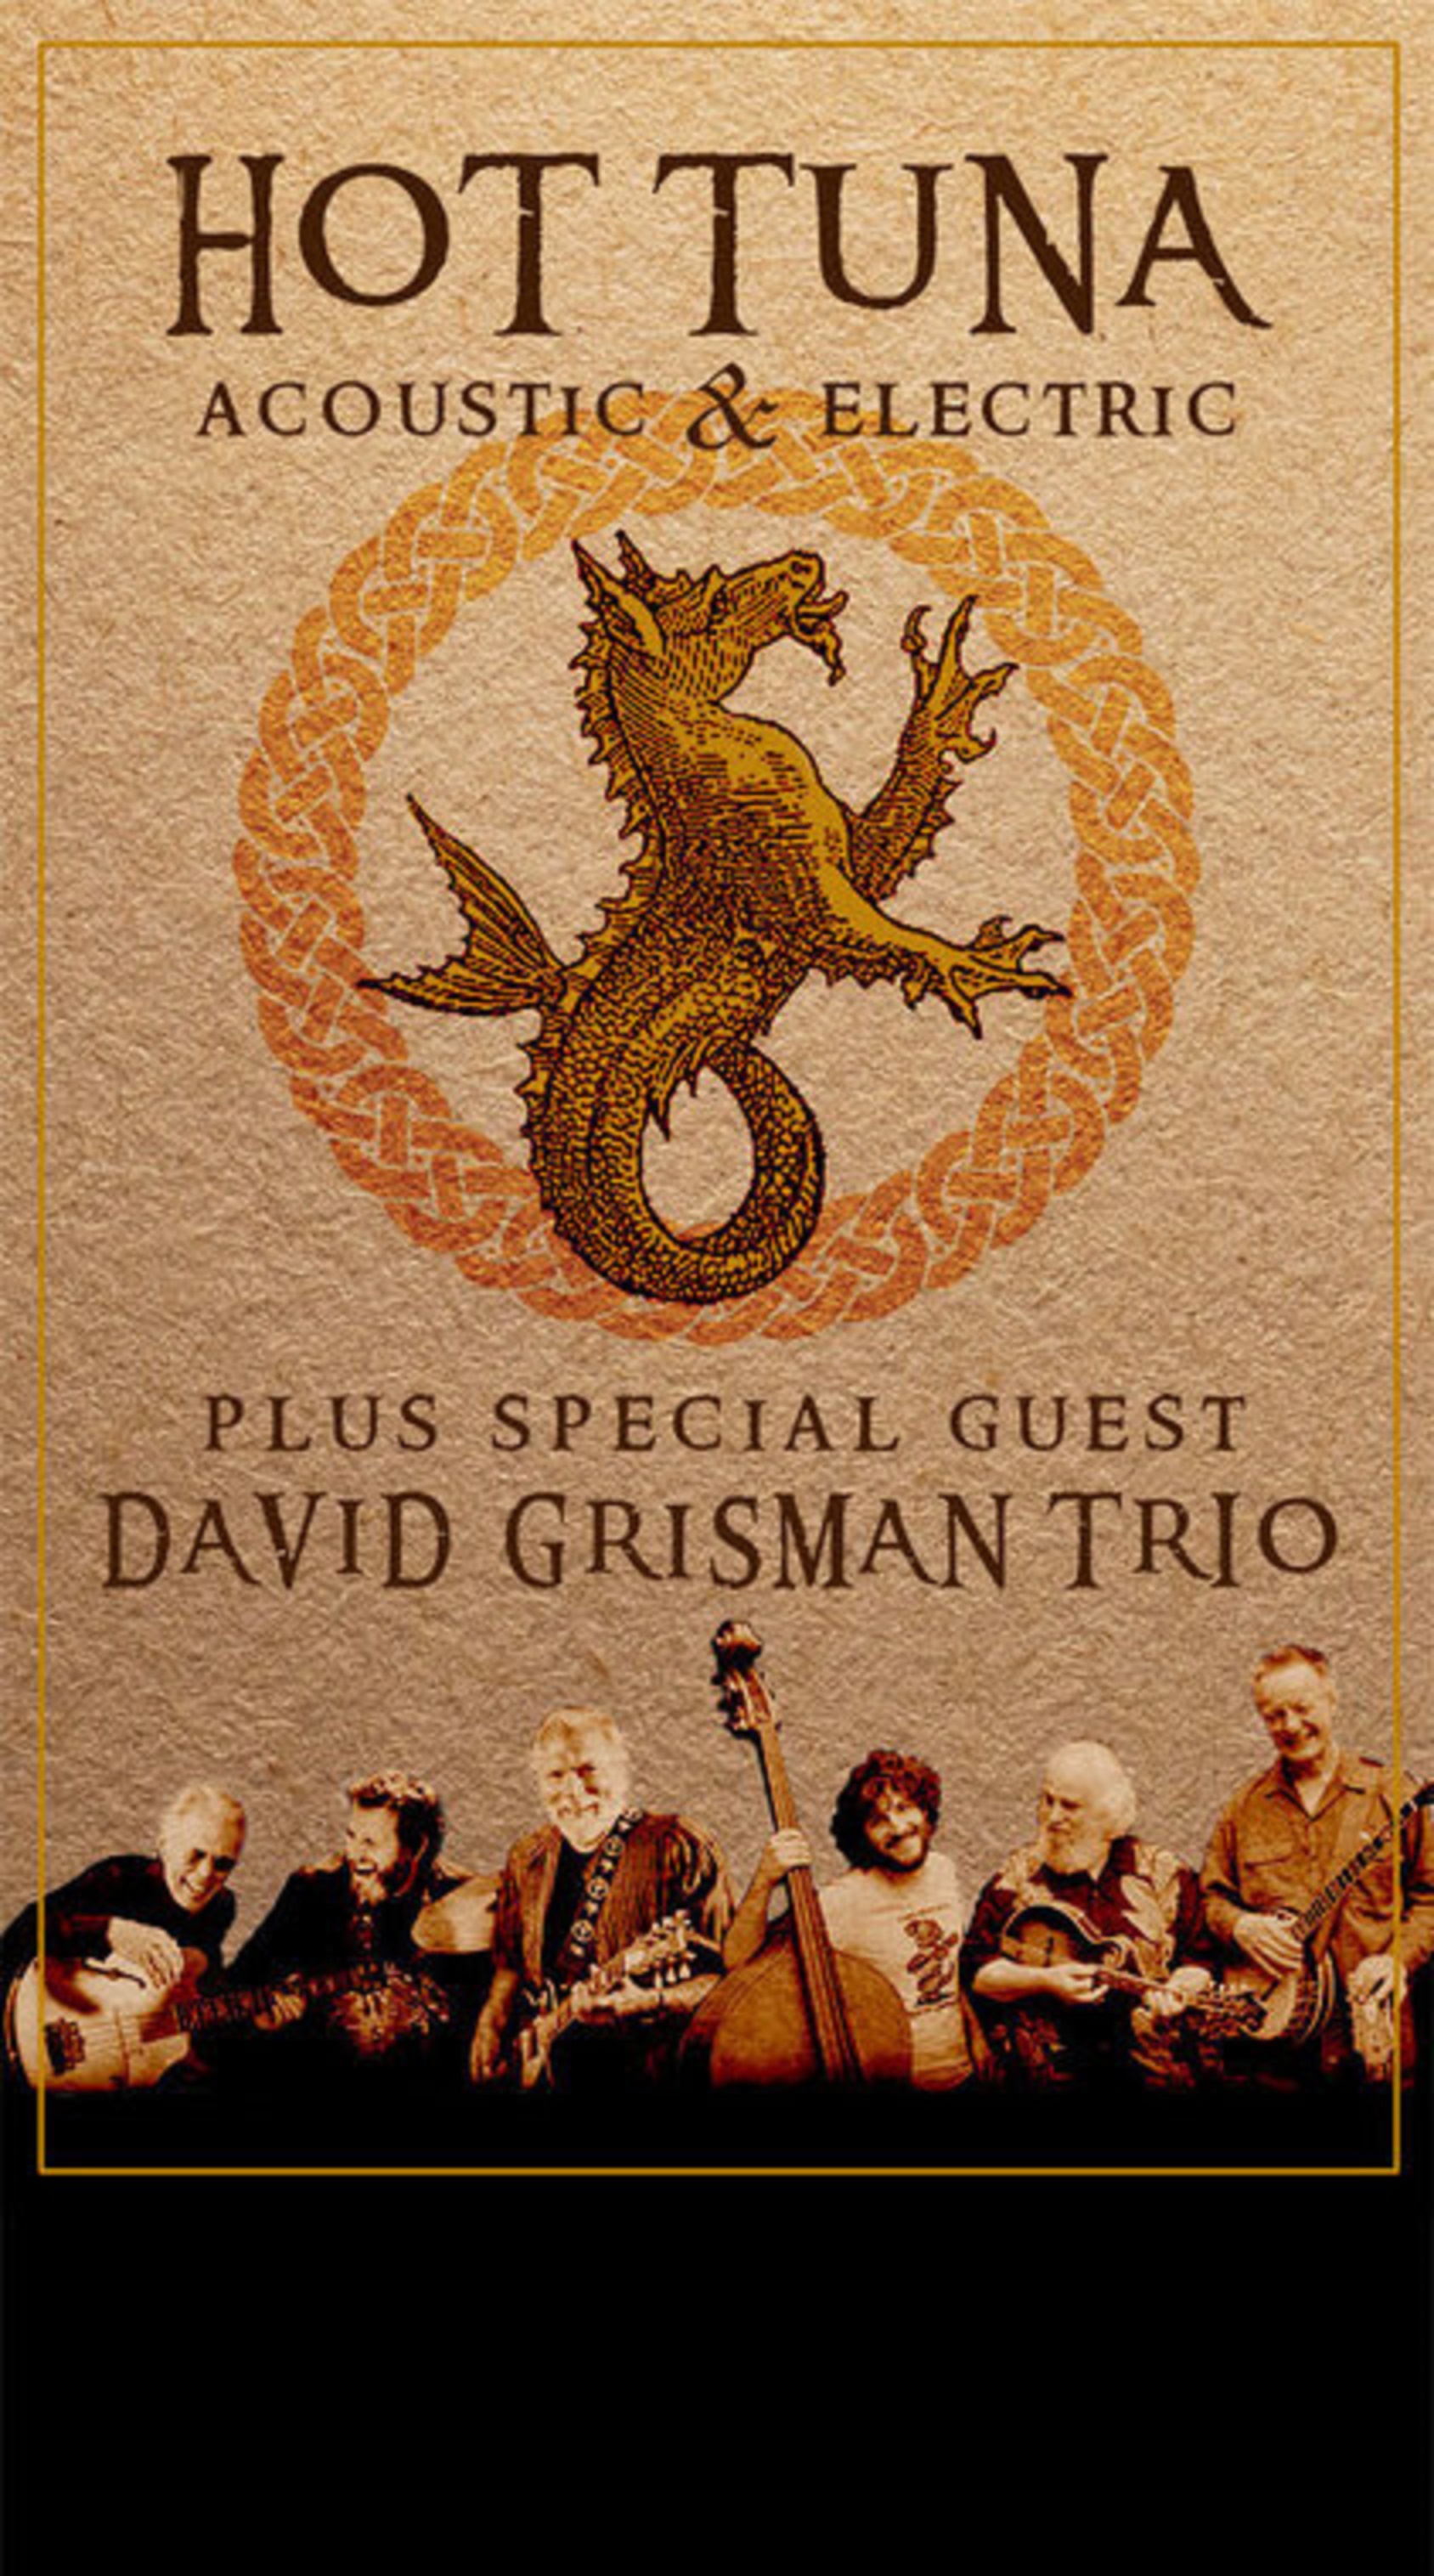 Hot Tuna + David Grisman Trio on Tour this Fall!